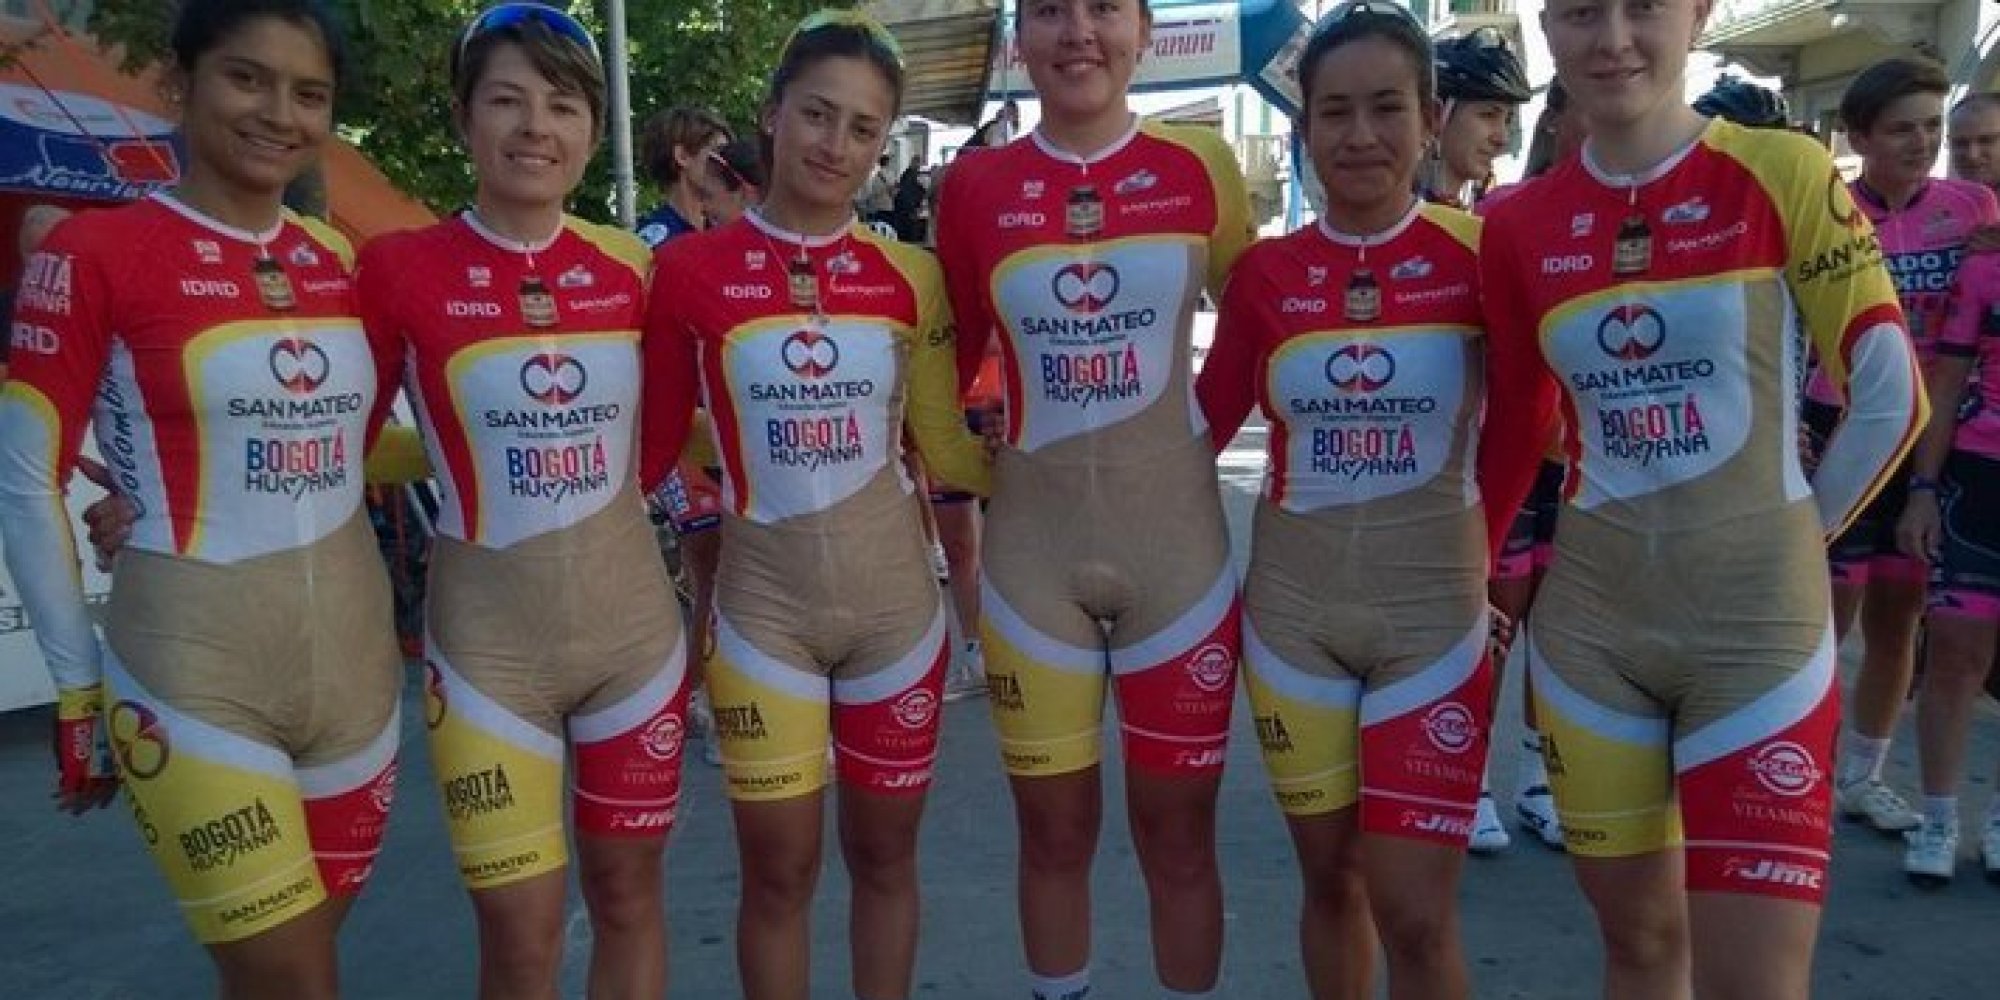 cycling uniforms